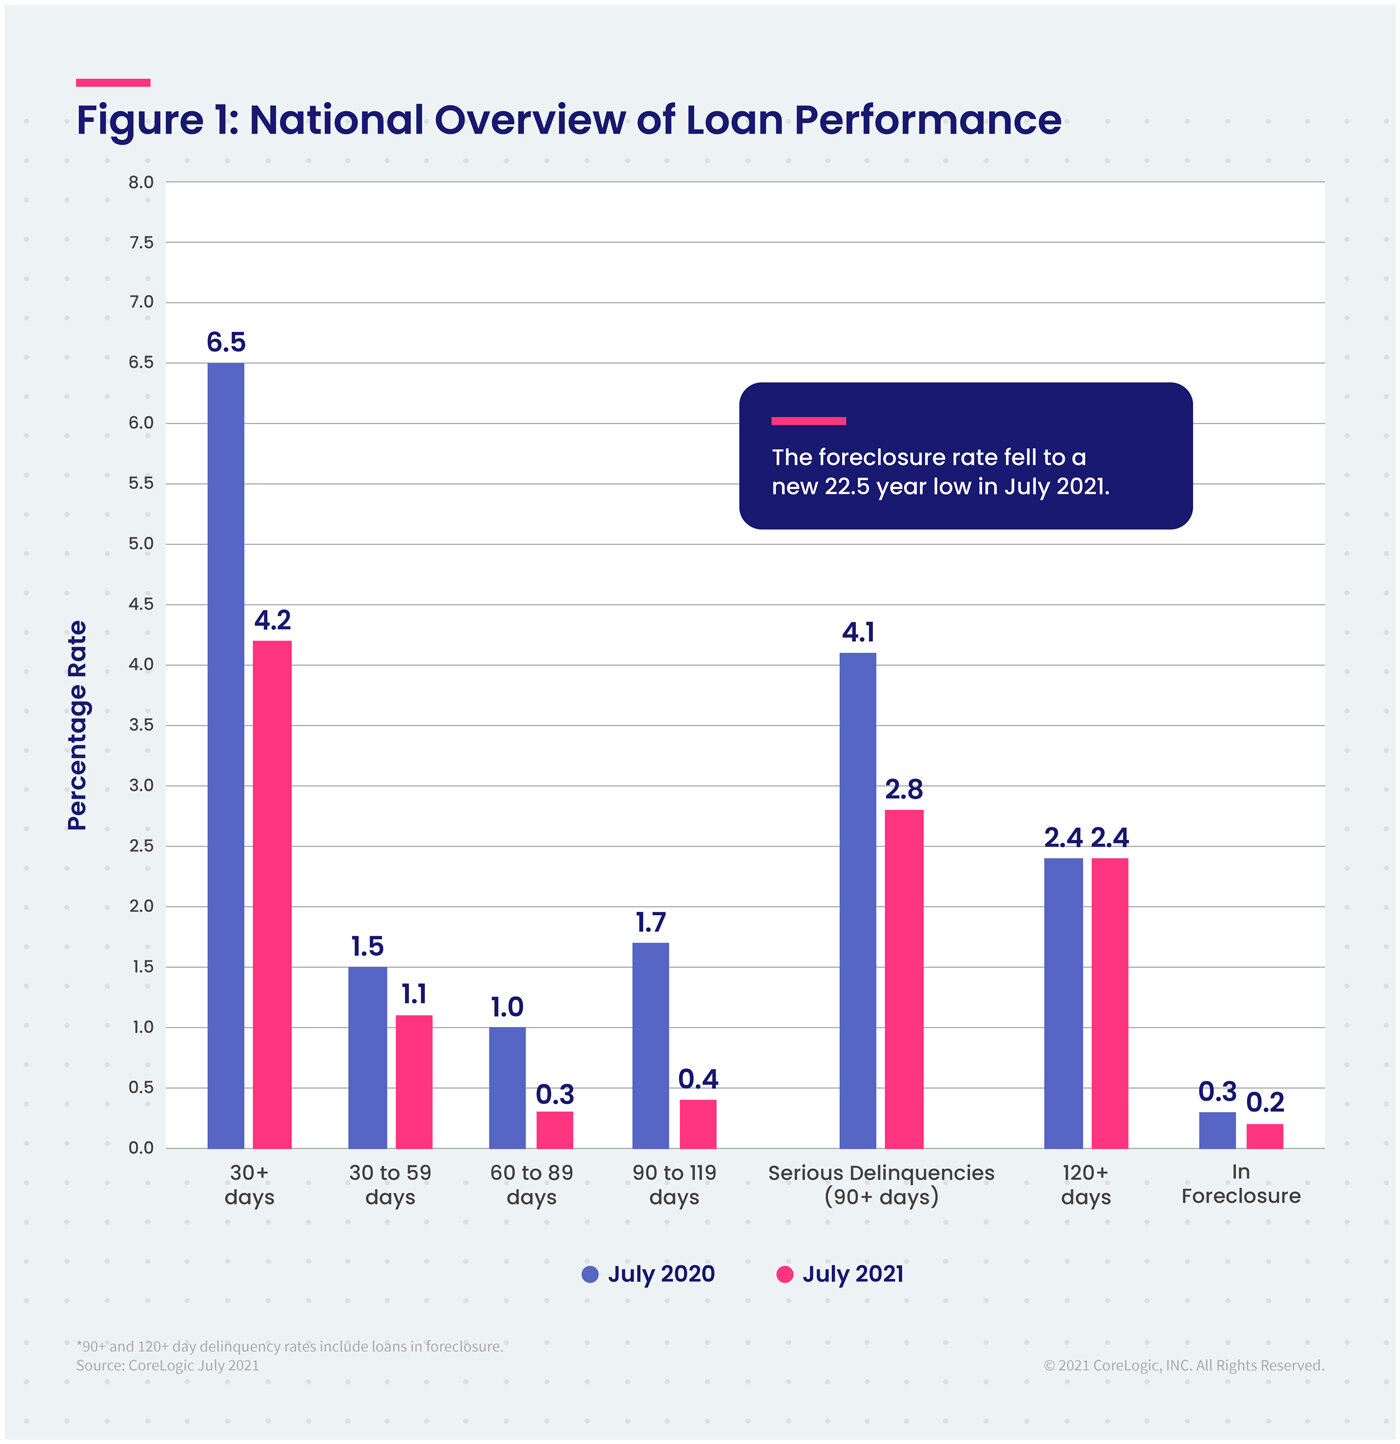 https://www.worldpropertyjournal.com/news-assets/National-Overview-of-Loan-Performance.jpg